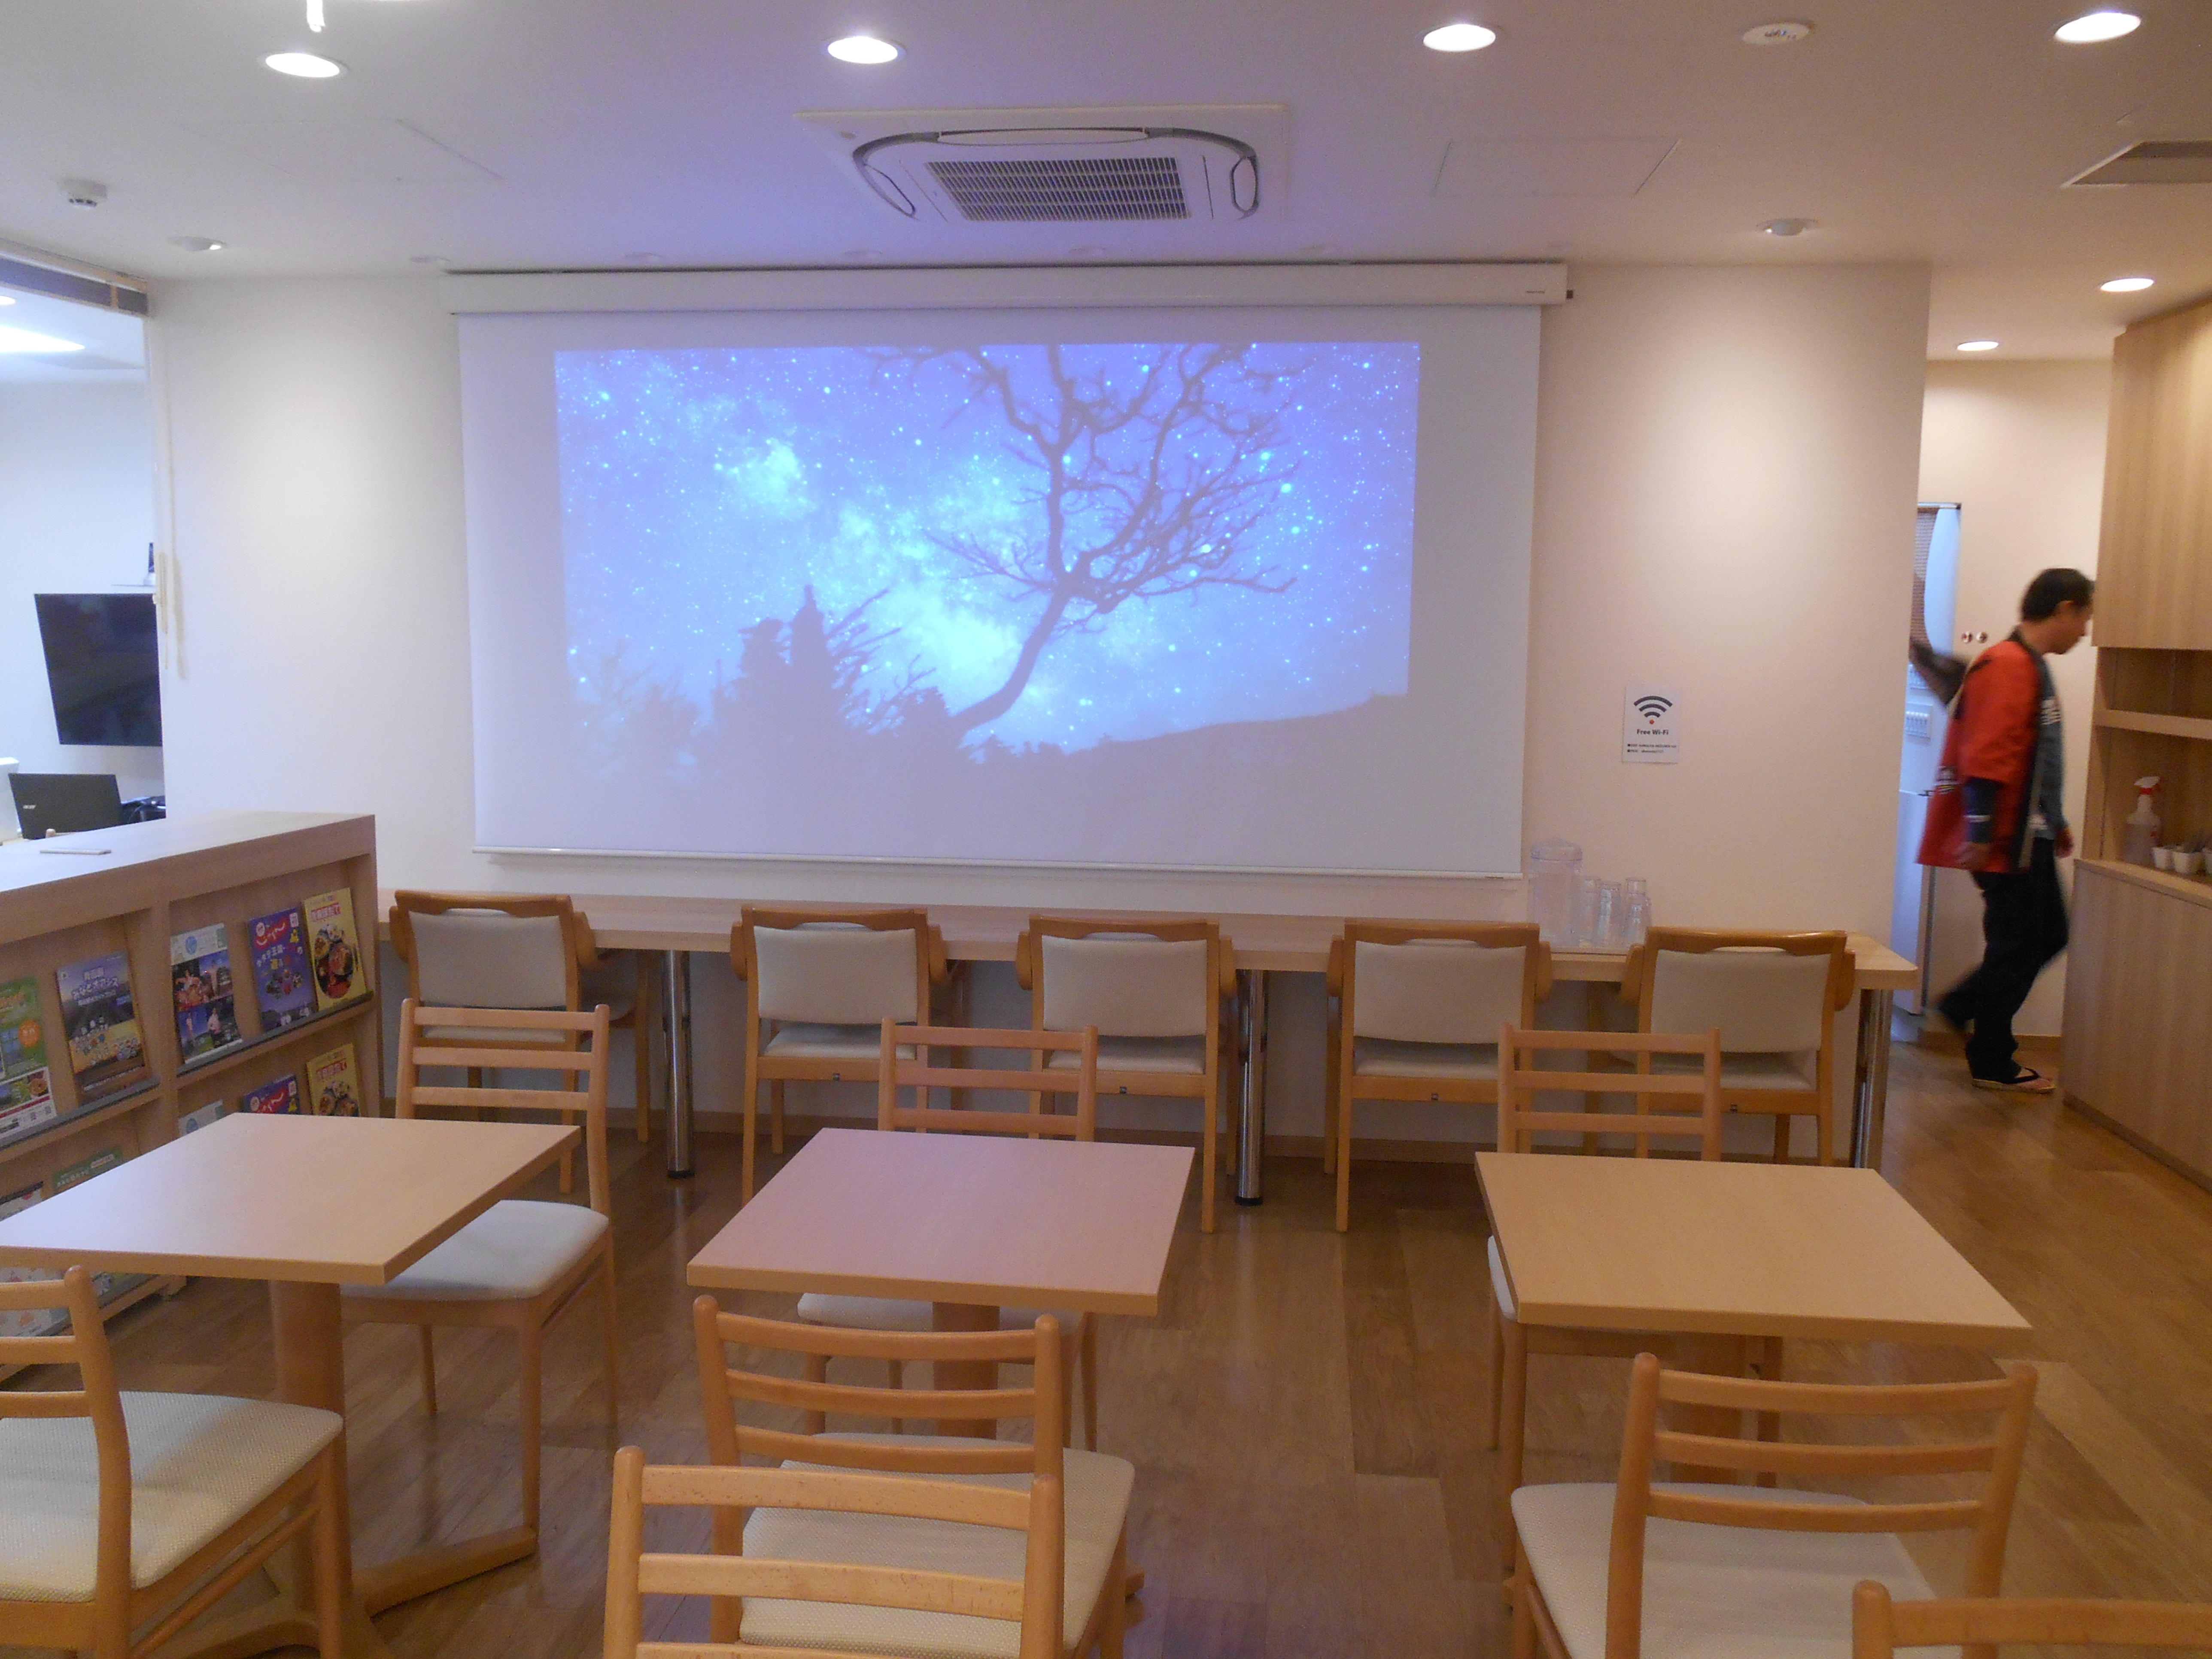 DSCN1355 - AoMoLink〜赤坂〜の第2回勉強会&交流会開催します。